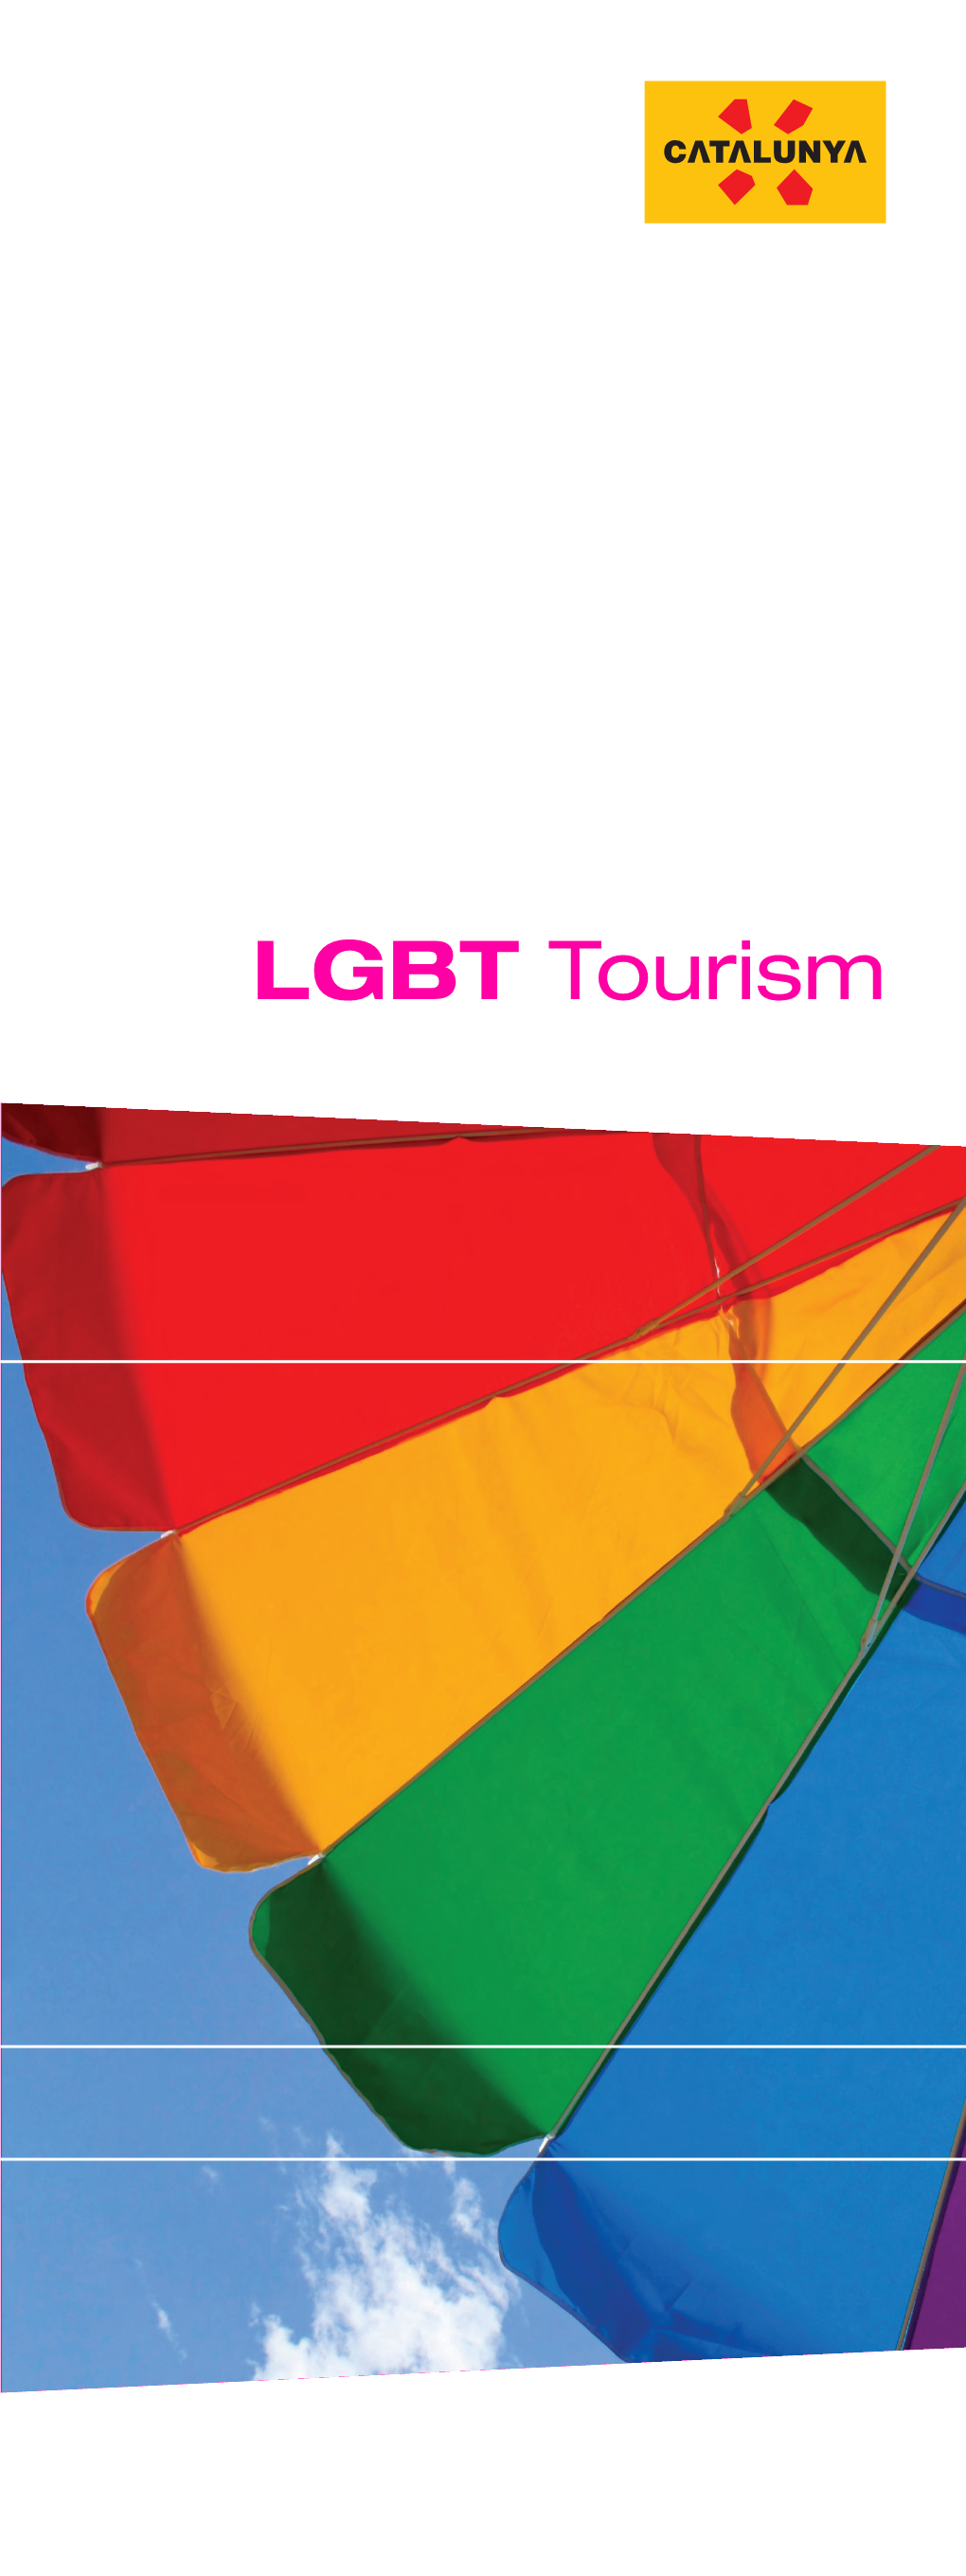 LGBT Tourism Index